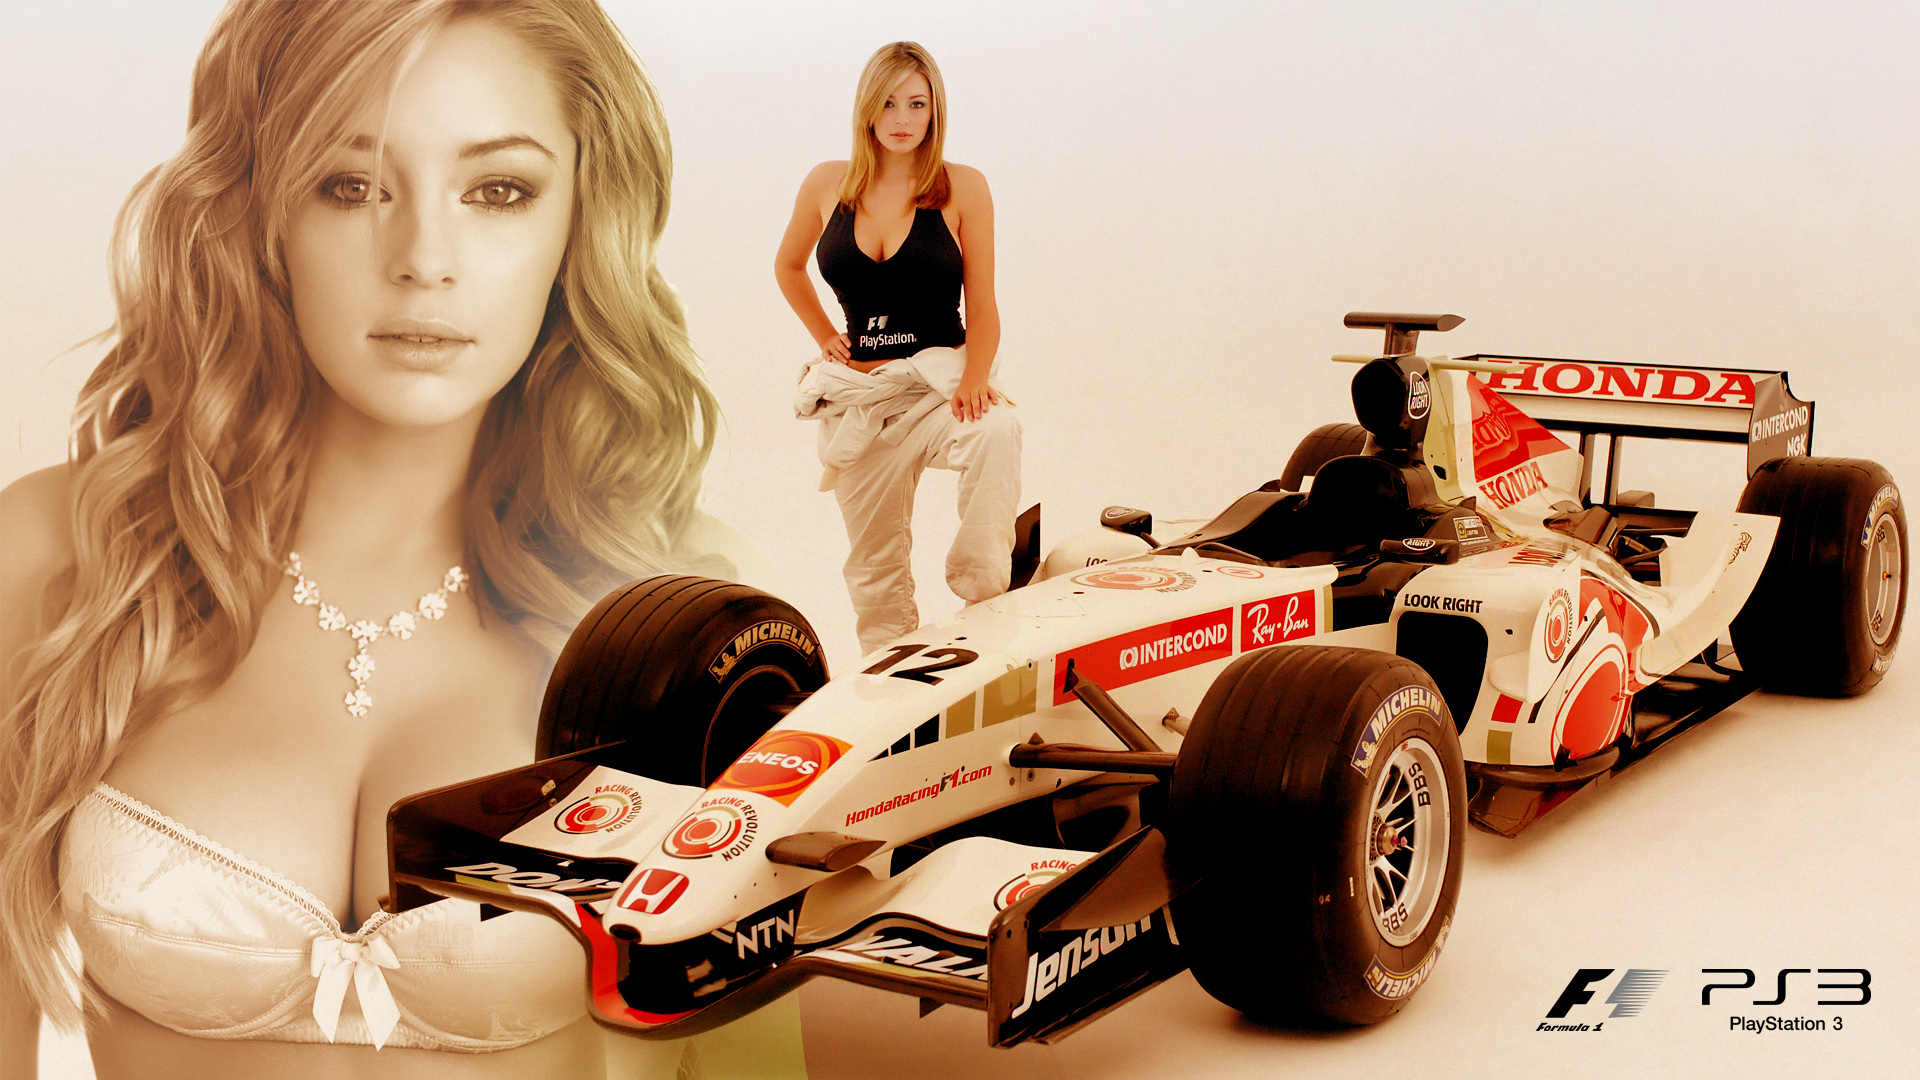 blondes, women, Honda, cars, bra, models, Keeley Hazell, Formula One, girls with cars, Playstation 3 - desktop wallpaper